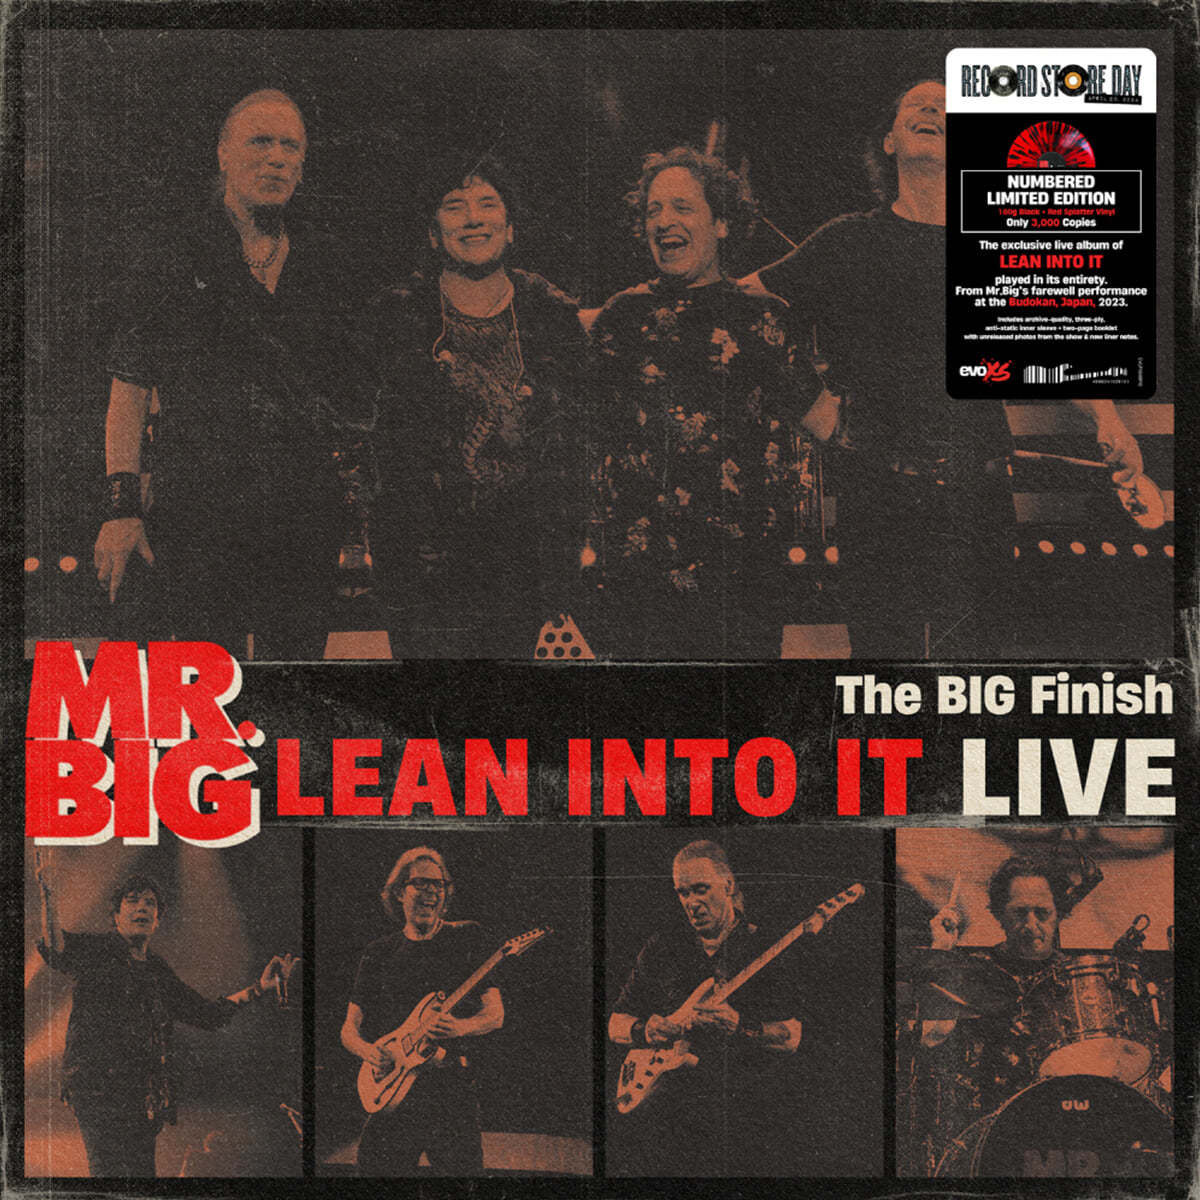 Mr. Big (미스터 빅) - The Big Finish - Lean into it Live - [블랙 & 레드 스플래터 컬러 LP]